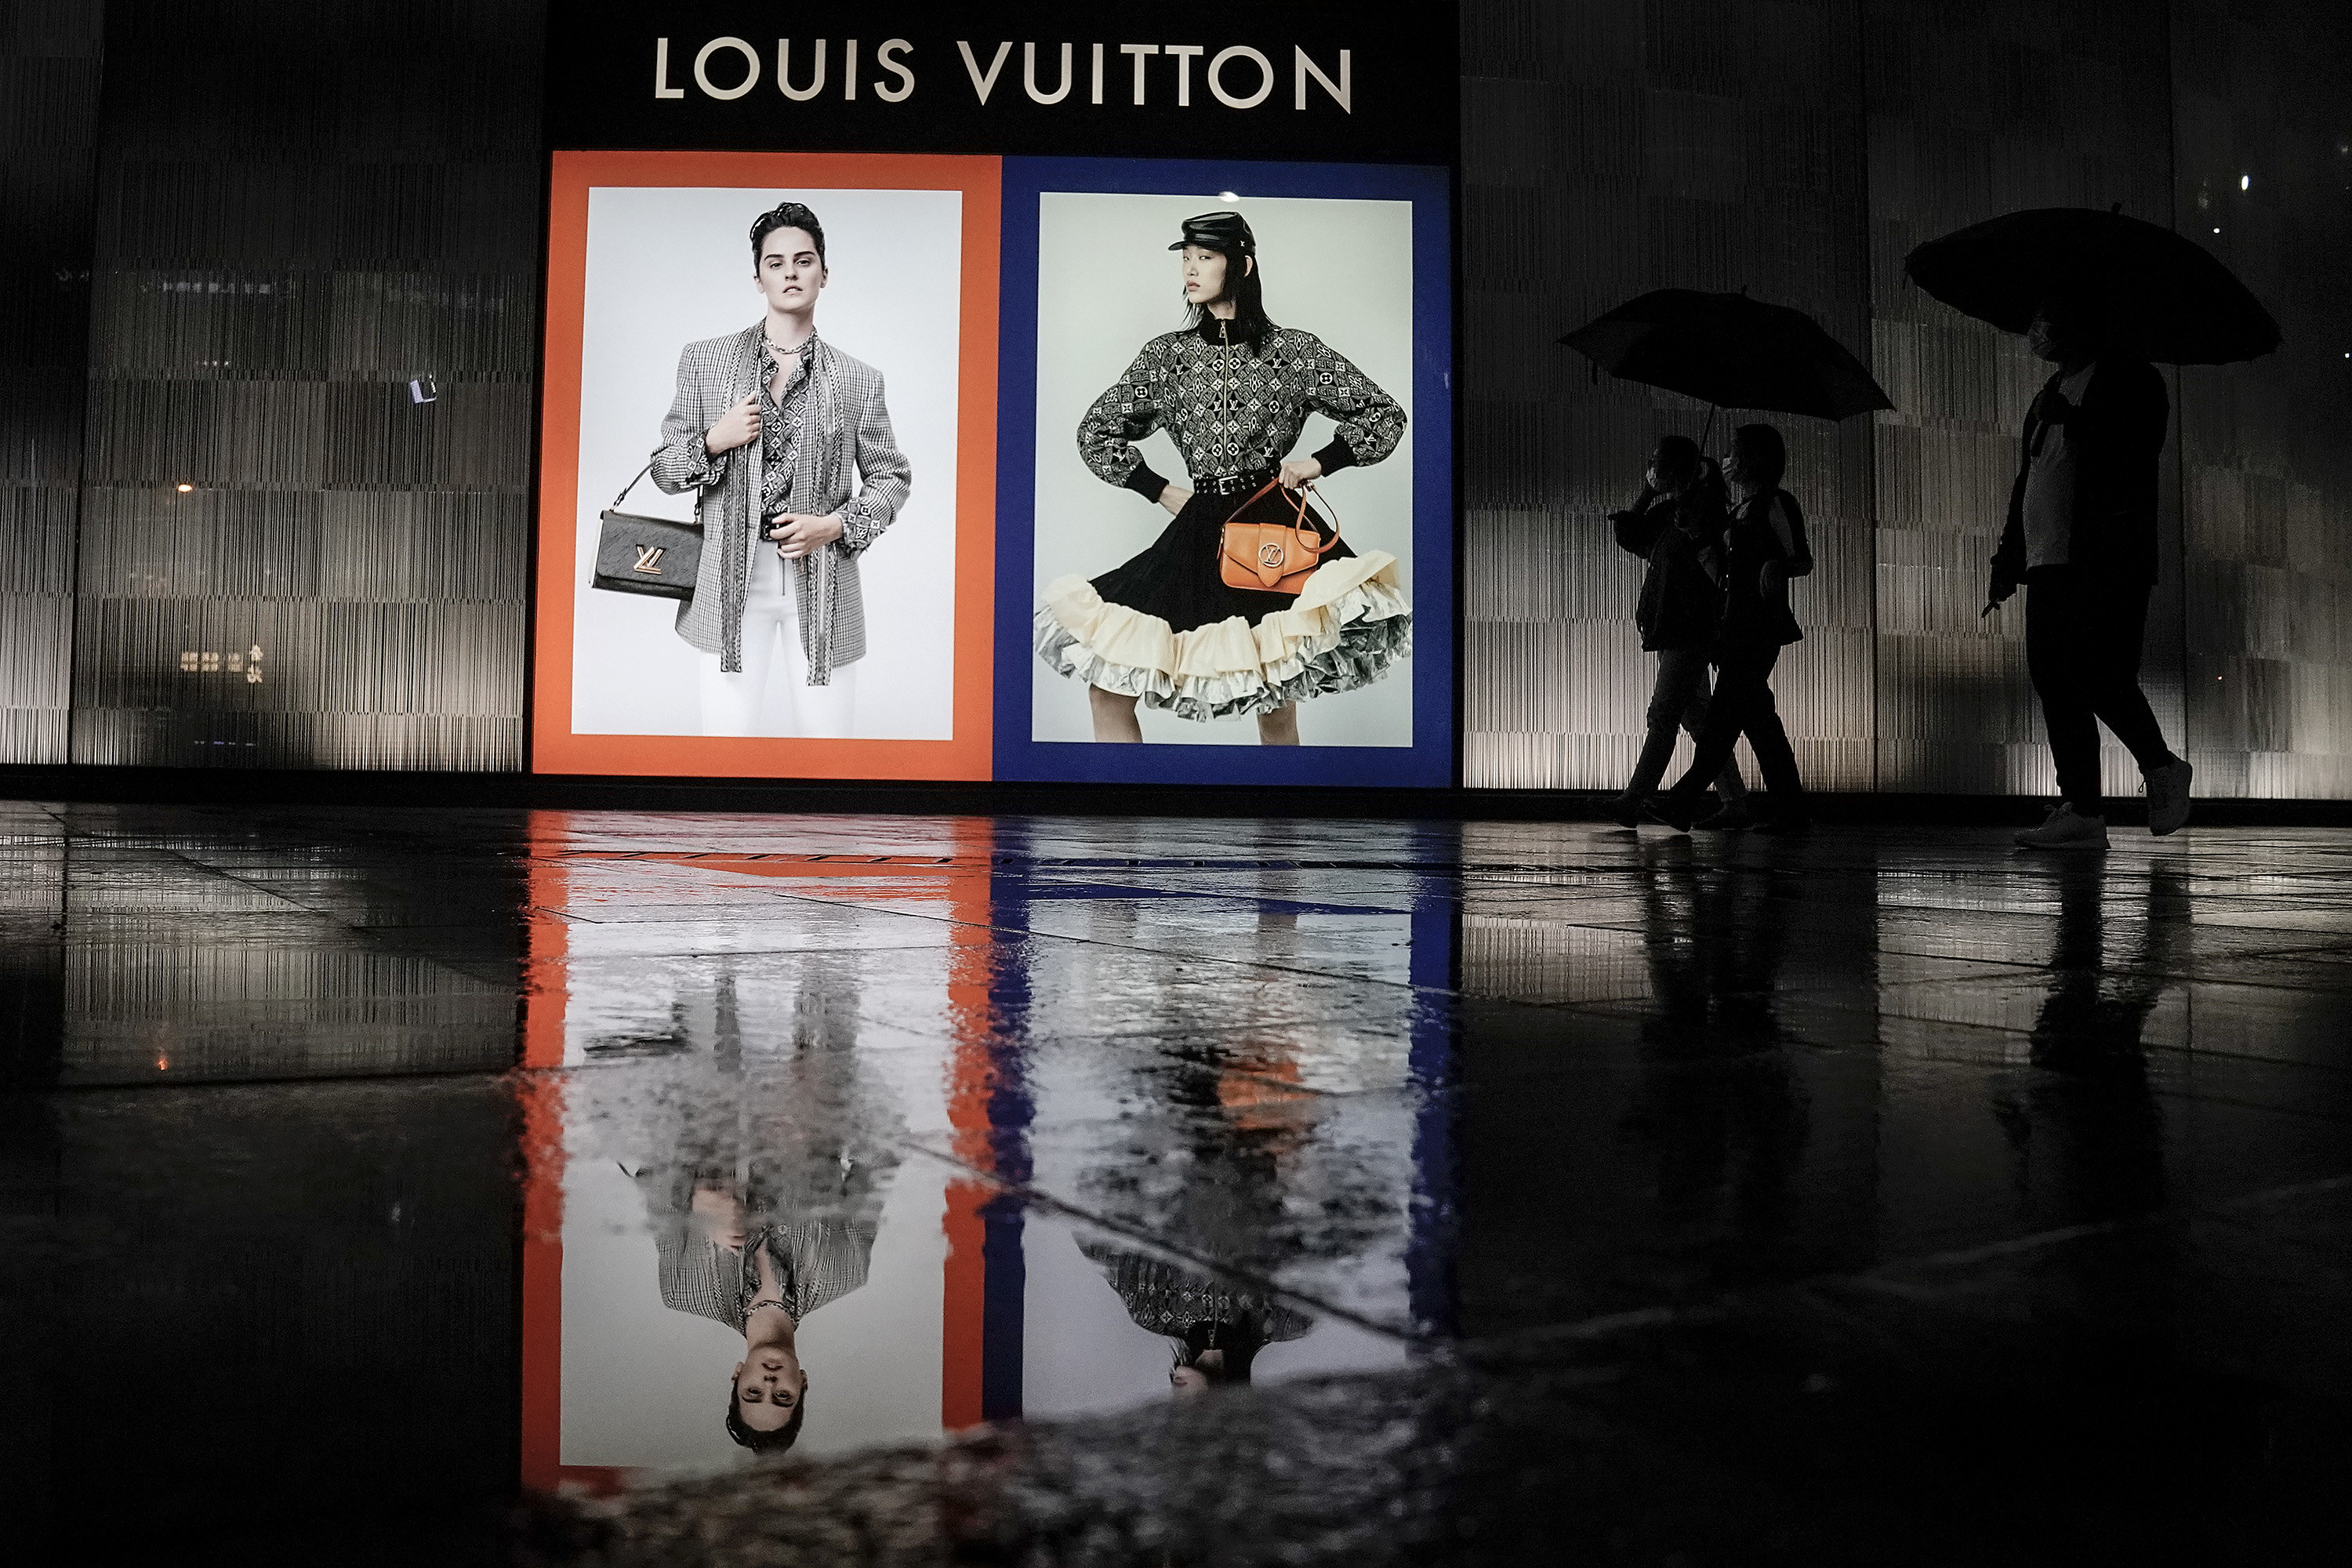 How To Pronounce Louis Vuitton - Correct pronunciation of Louis Vuitton